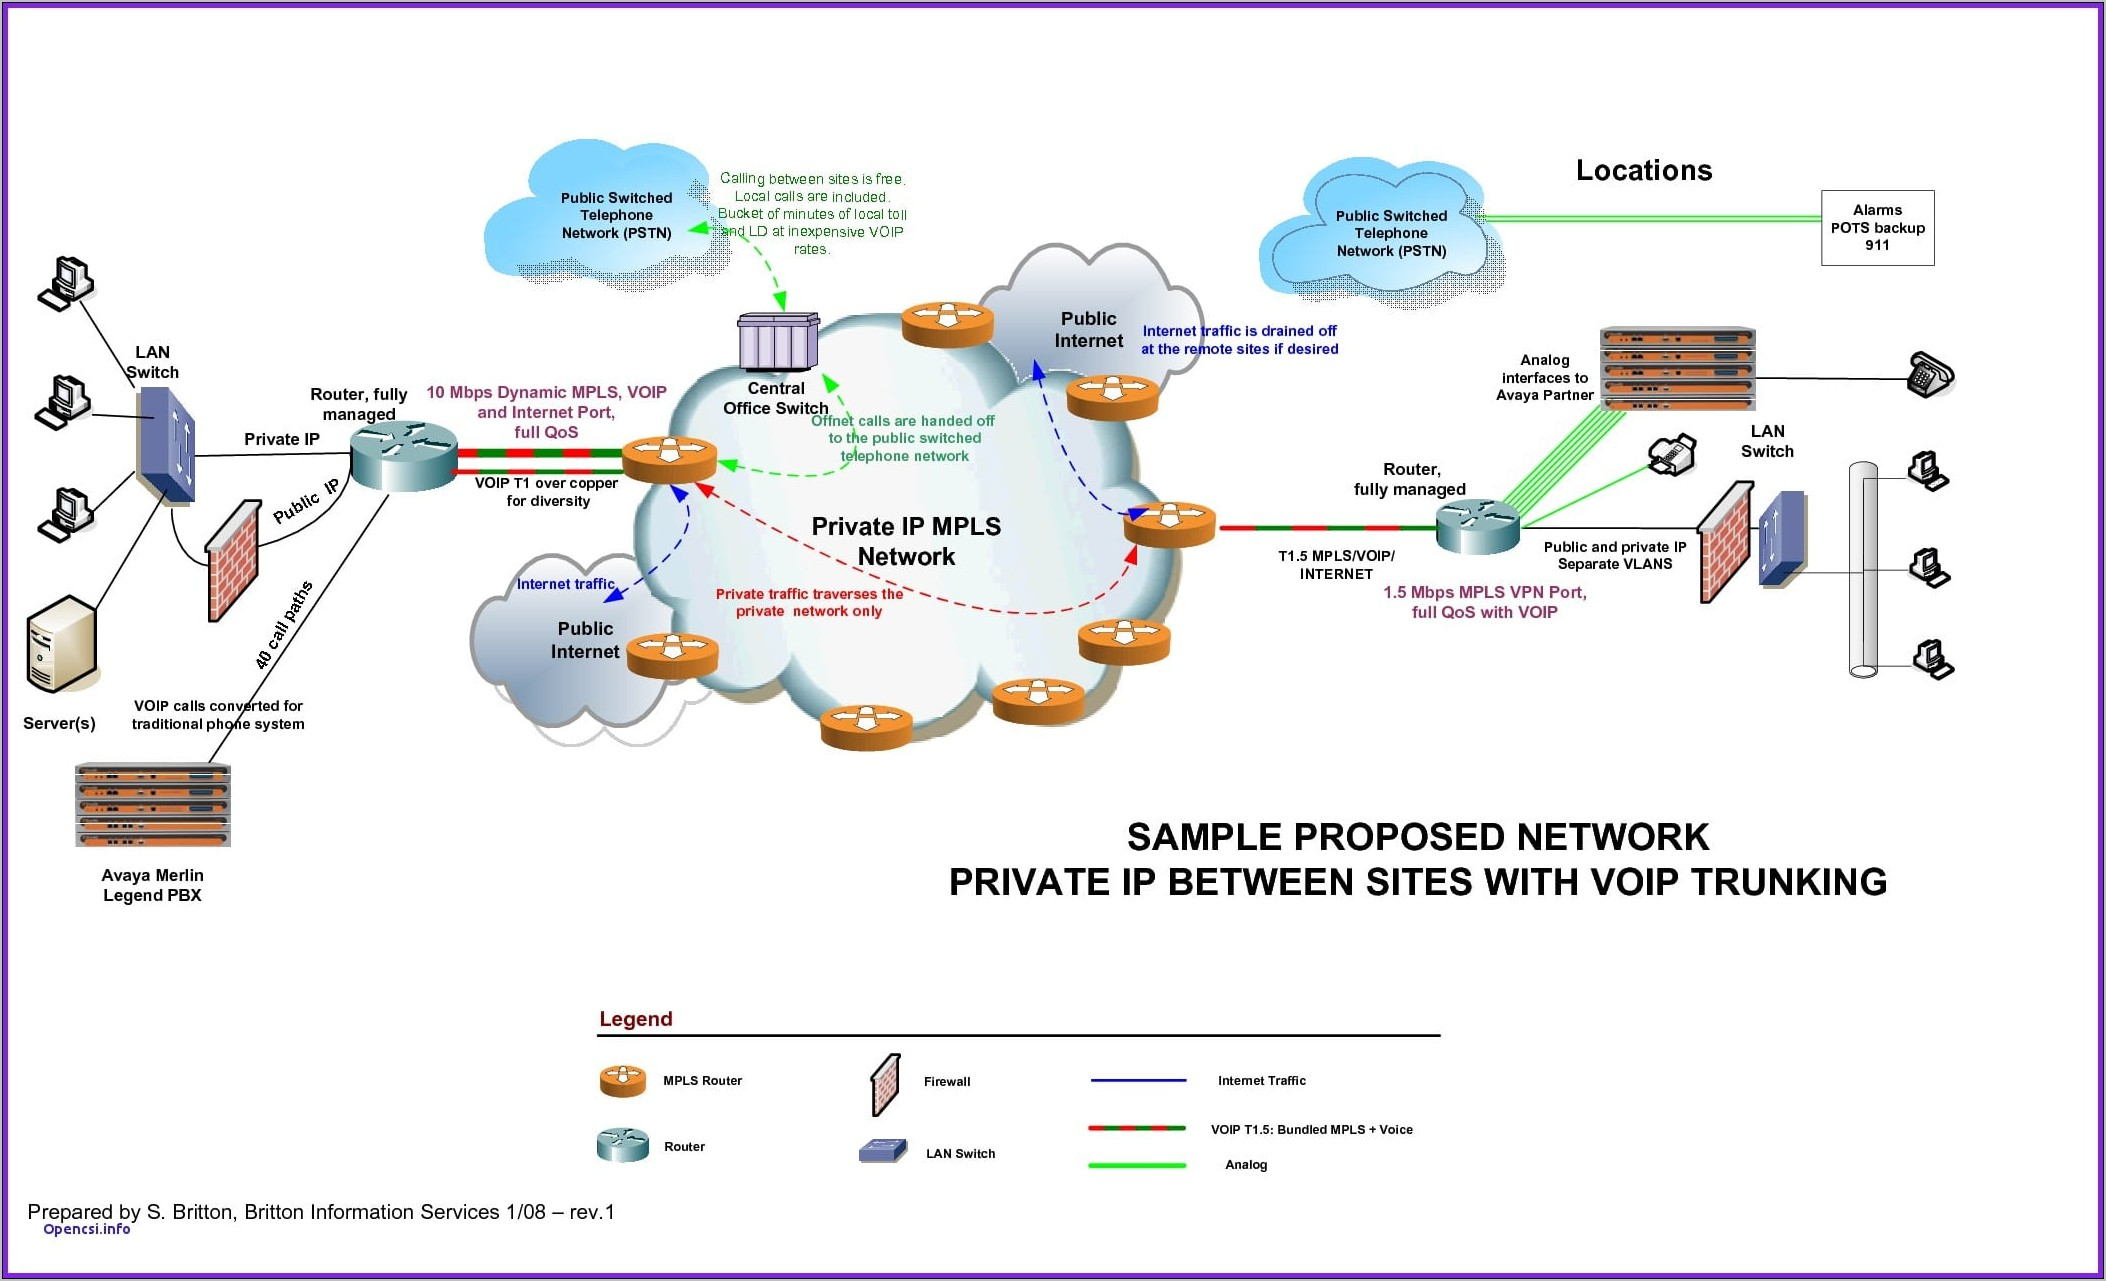 Visio Network Diagram Templates Download